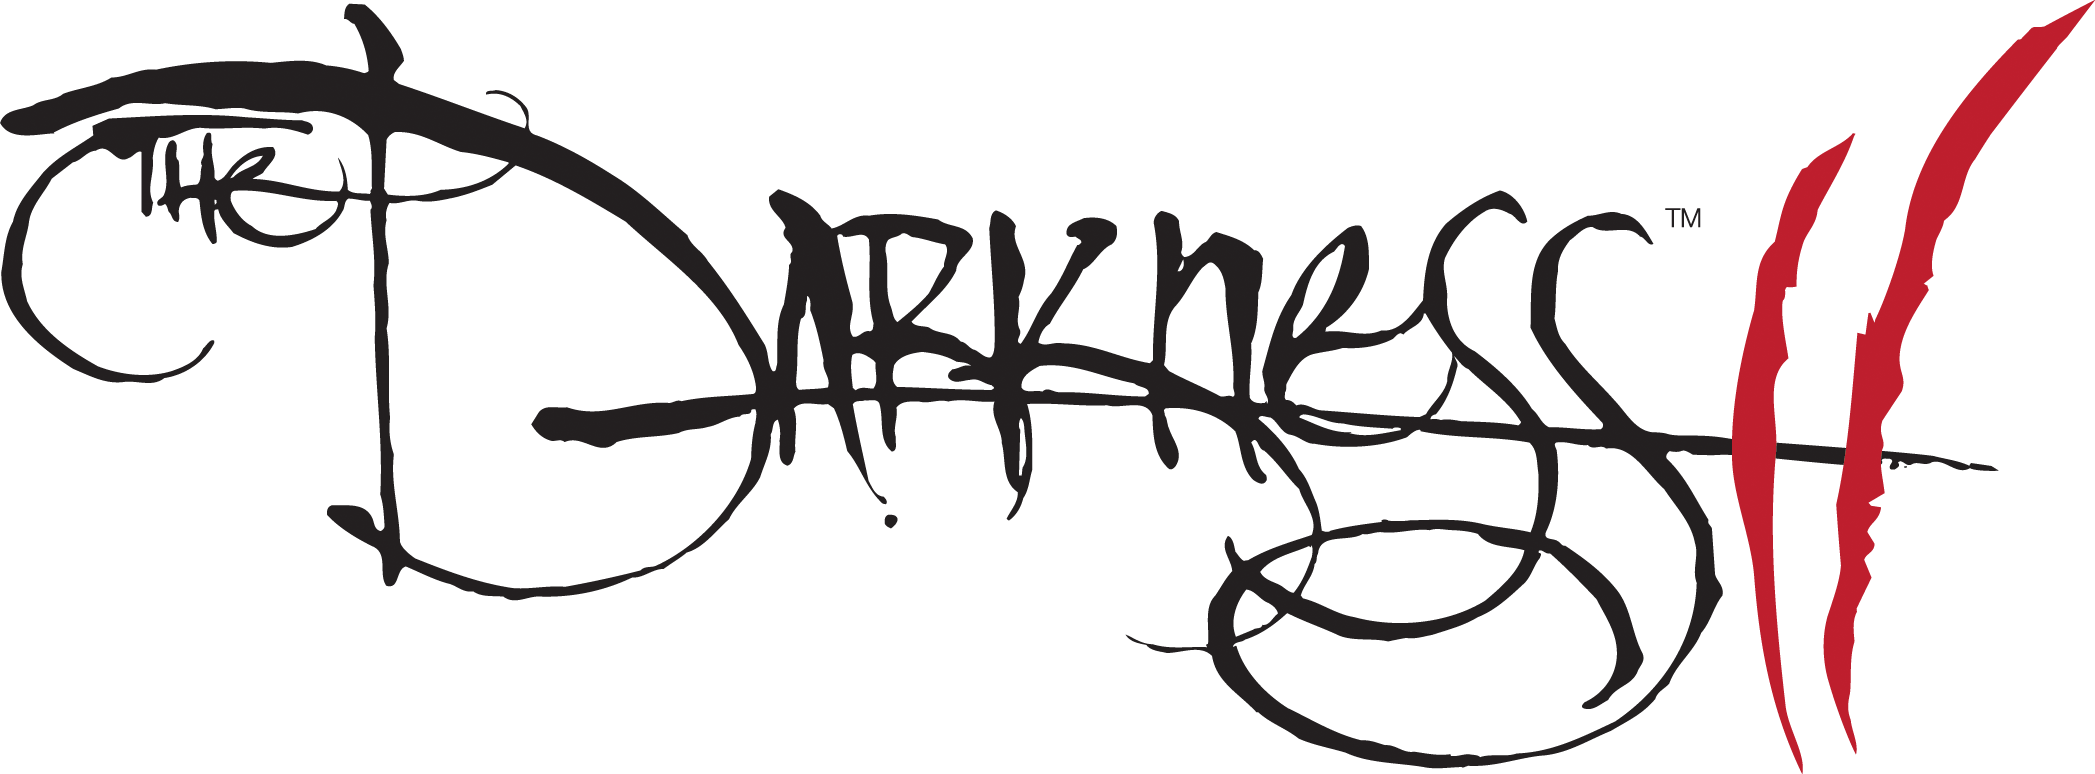 Darkness Logo - DARKNESS II LOGO - Nerd Reactor